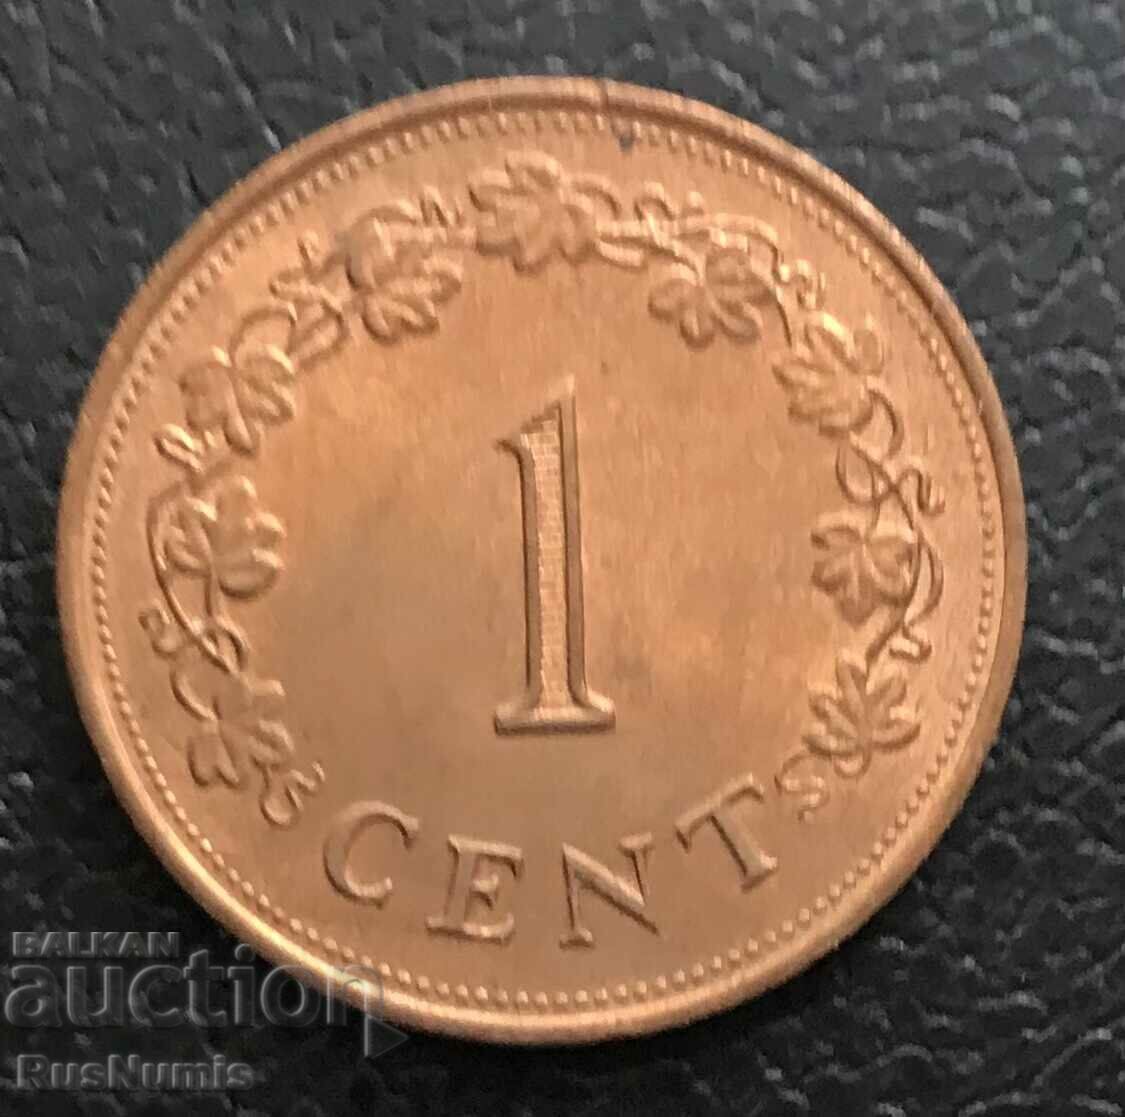 Malta. 1 cent 1977